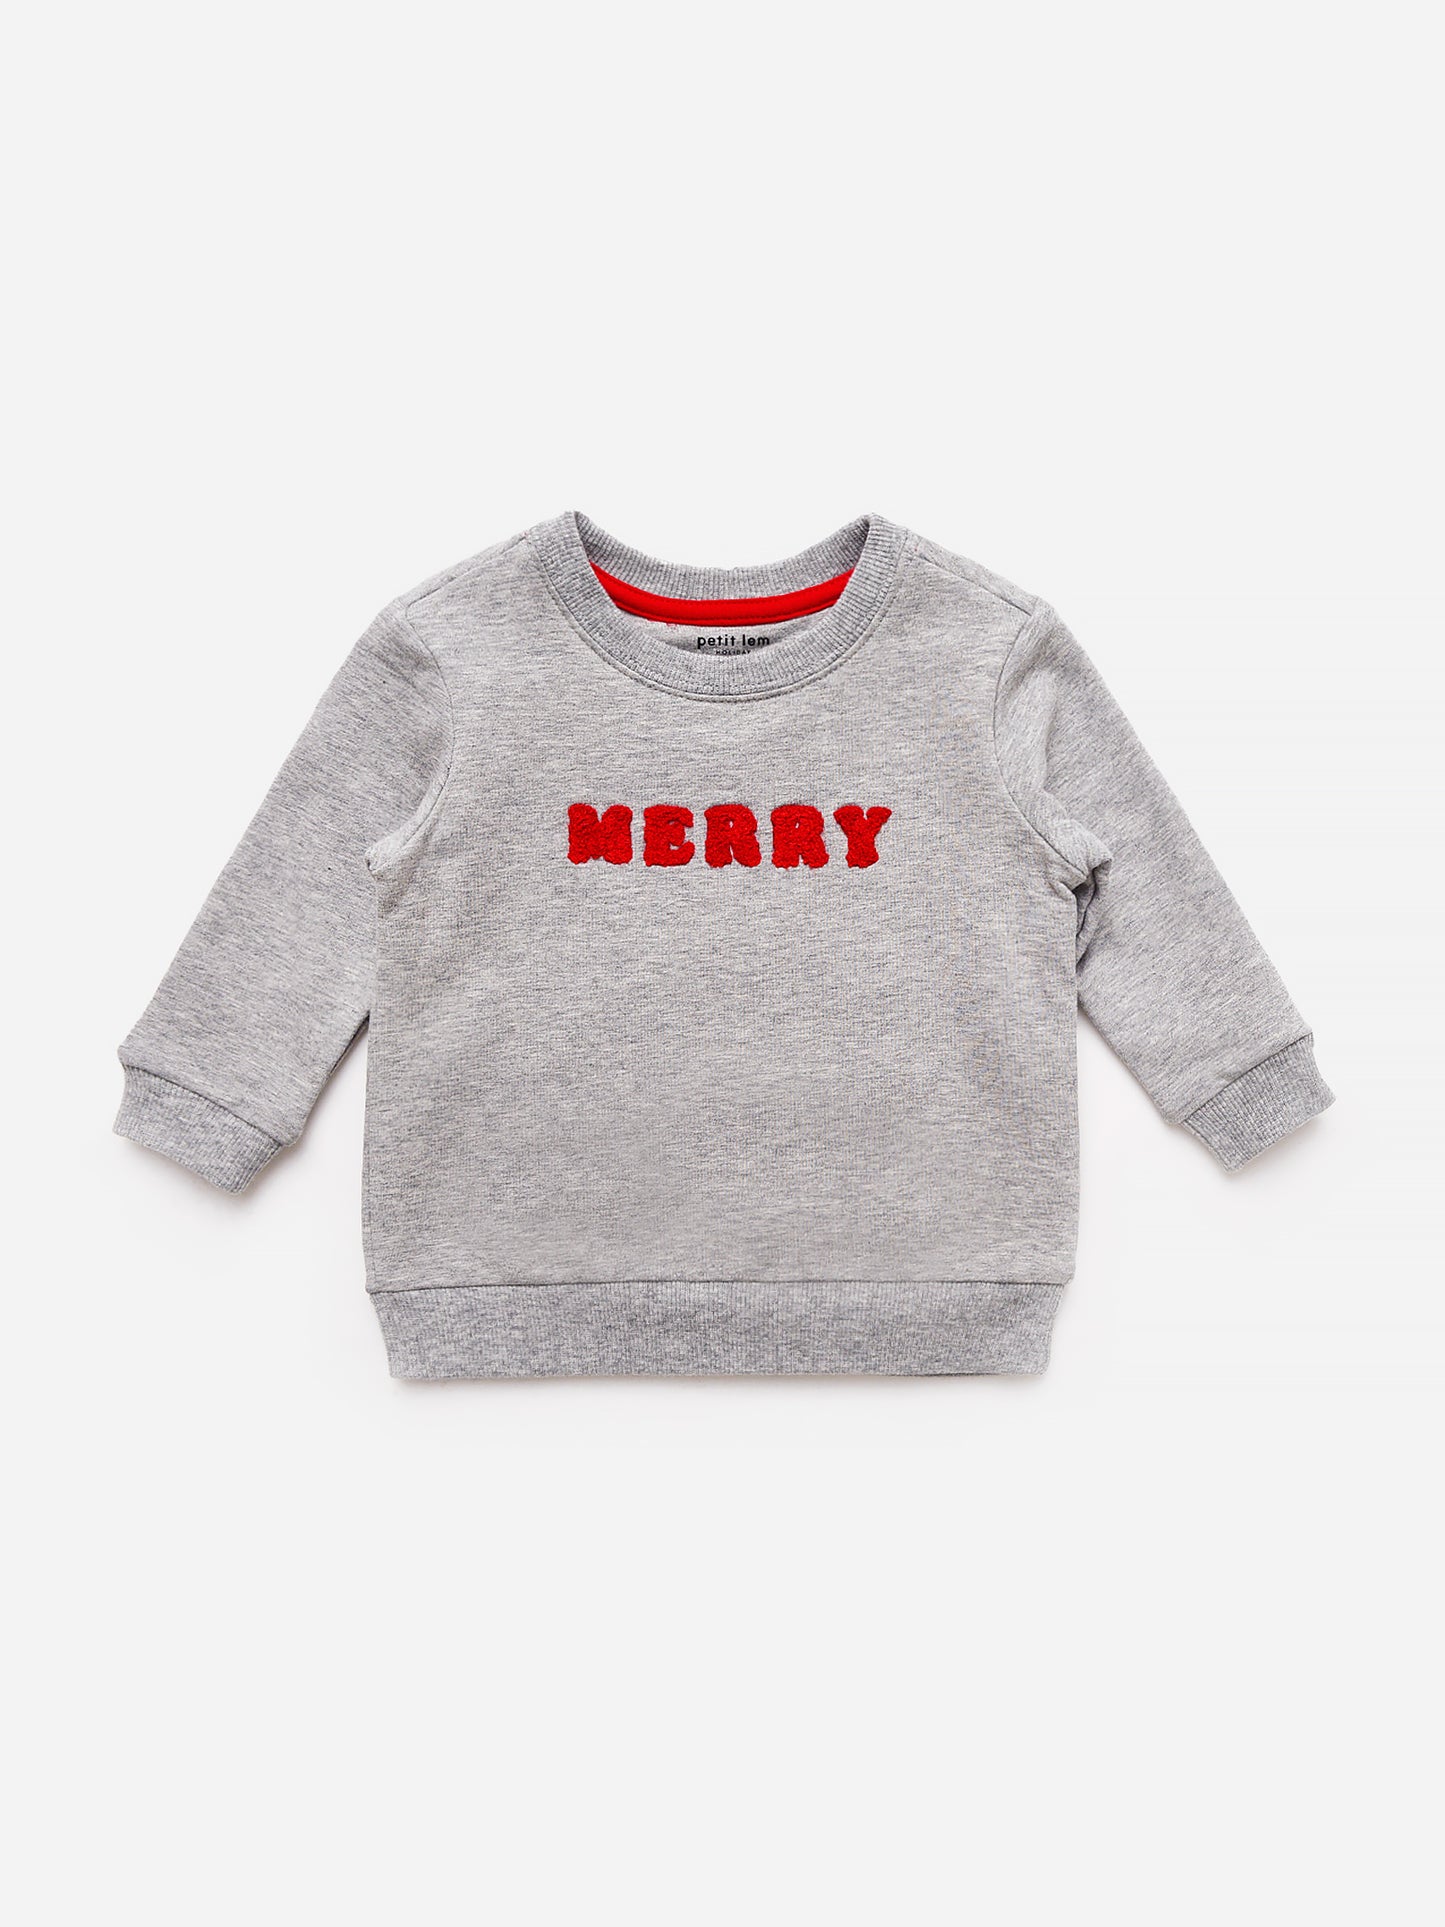 Petit Lem Little Kids' Merry Sweatshirt